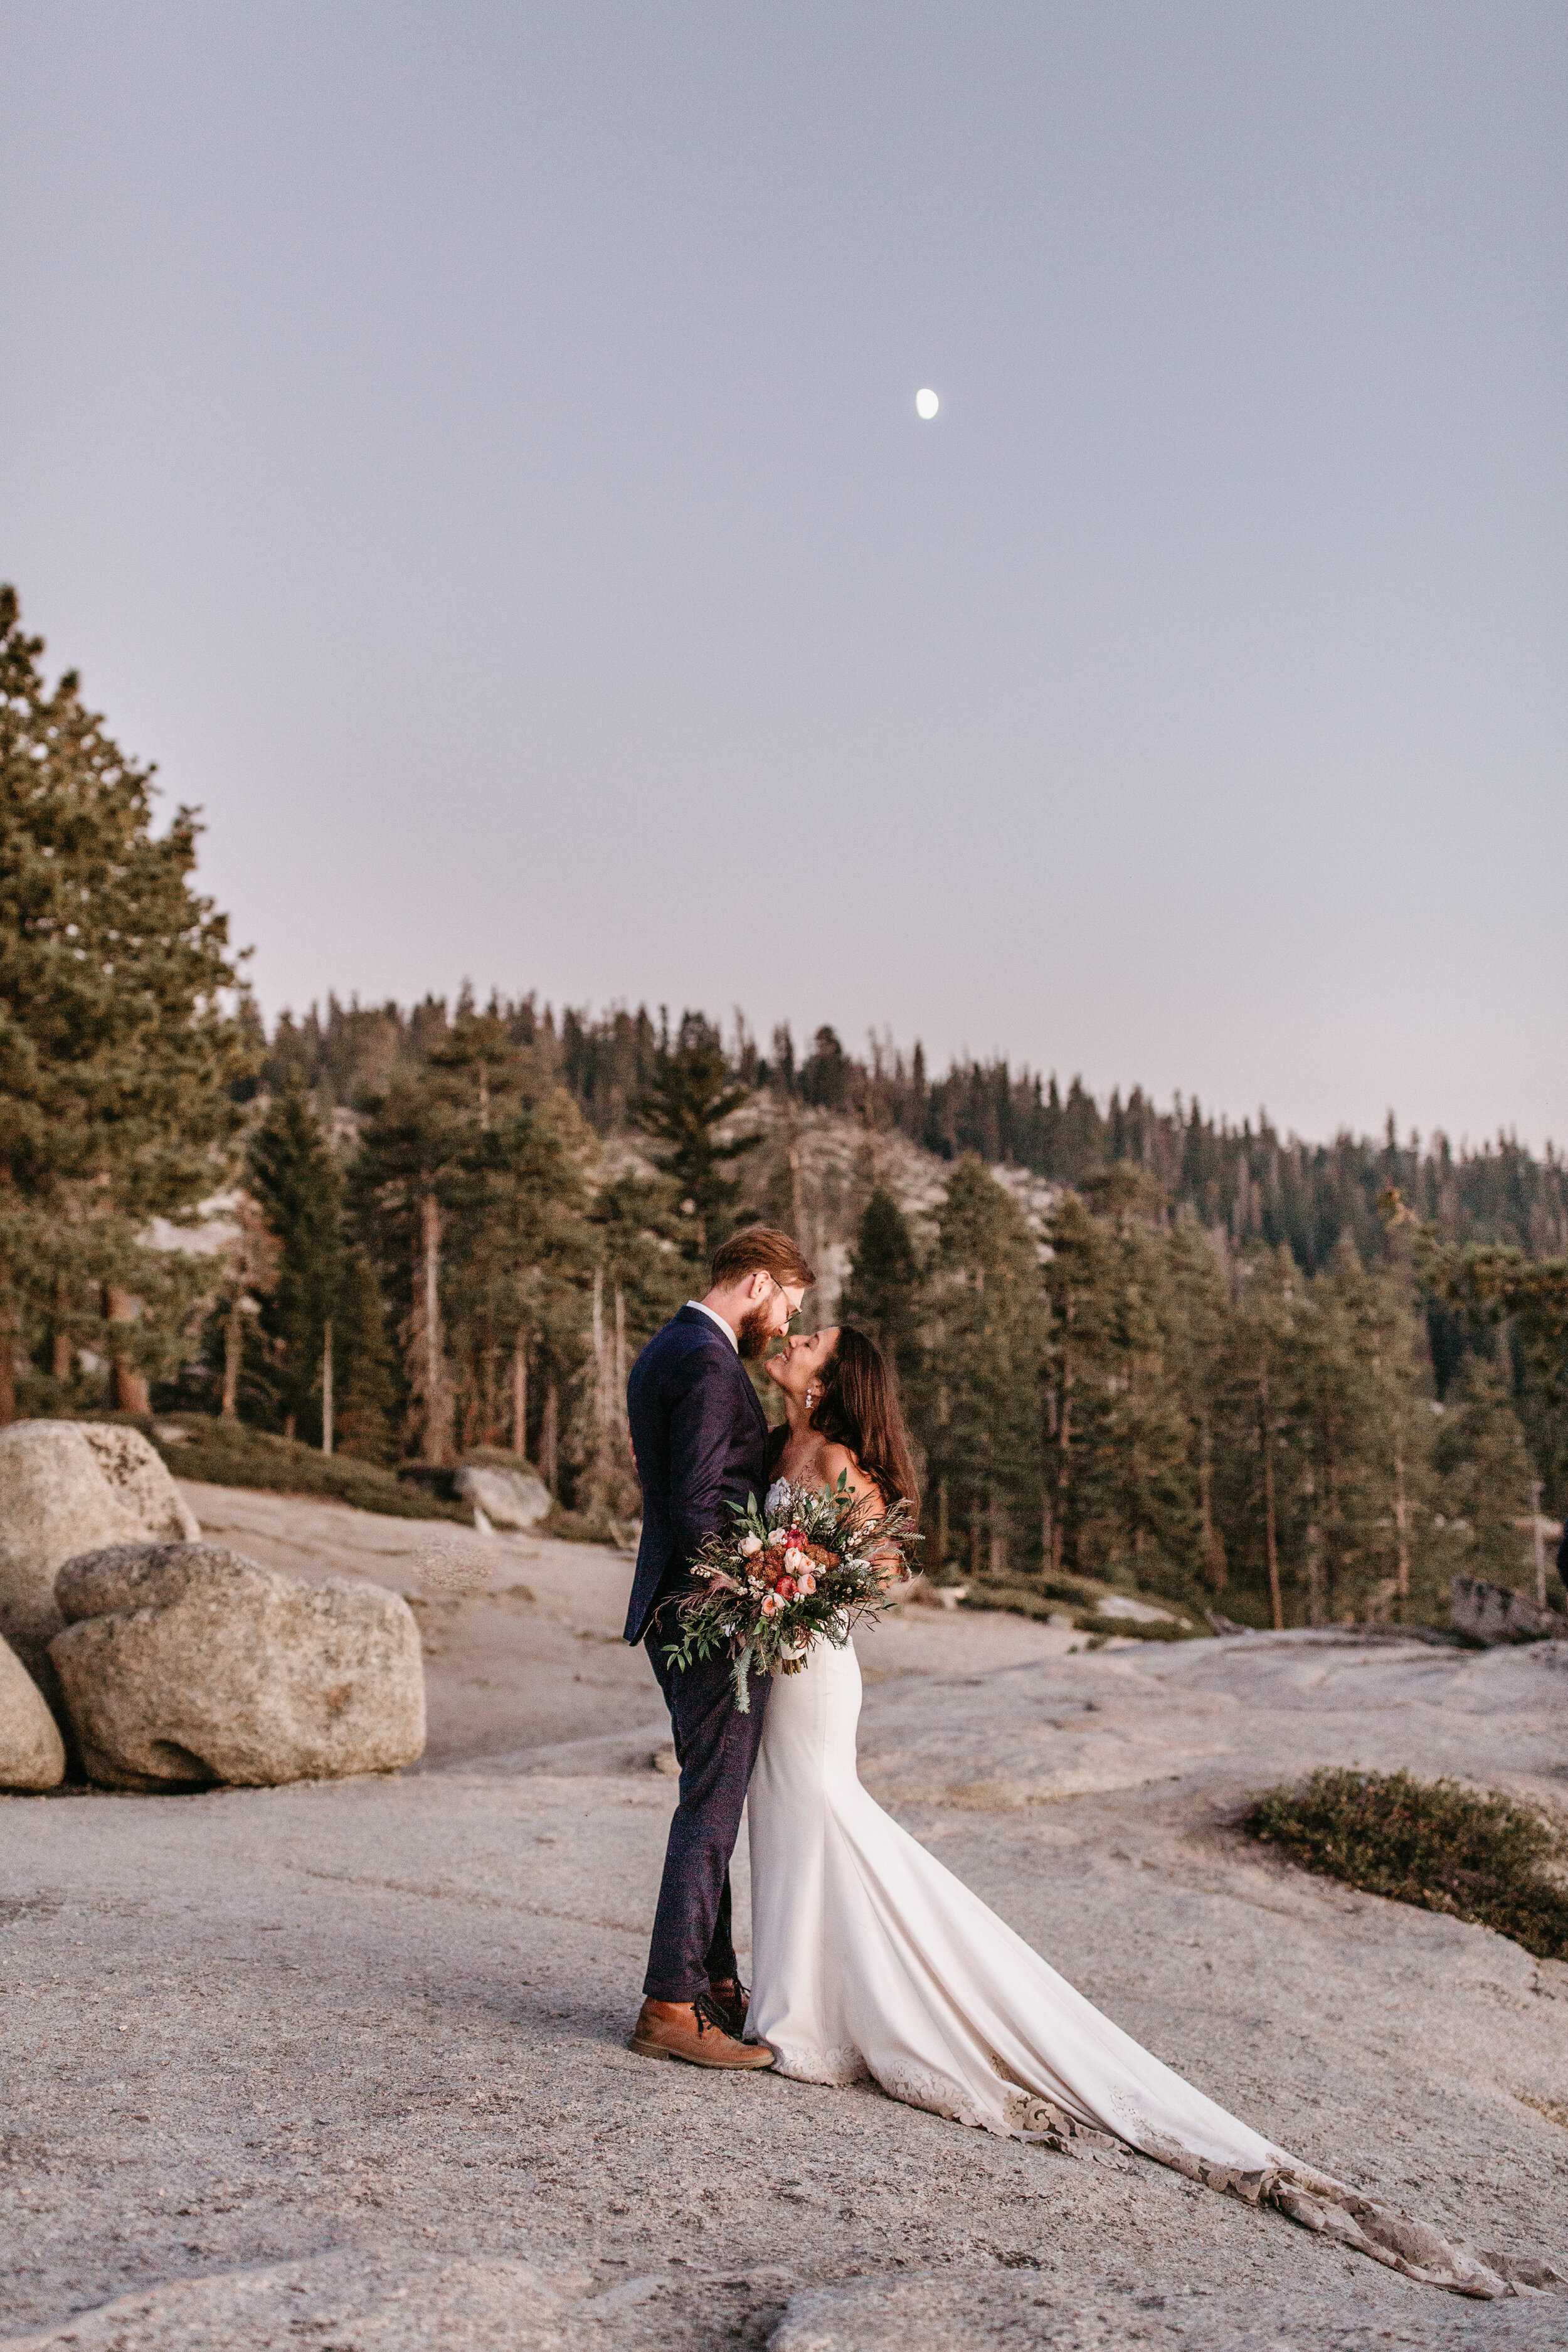 Nicole-Daacke-Photography-yosemite-national-park-elopement-photography-adventure-elopement-in-yosemite-taft-point-sunset-elopement-photographs-california-intimate-destination-wedding-in-yosemite-national-park-9518.jpg